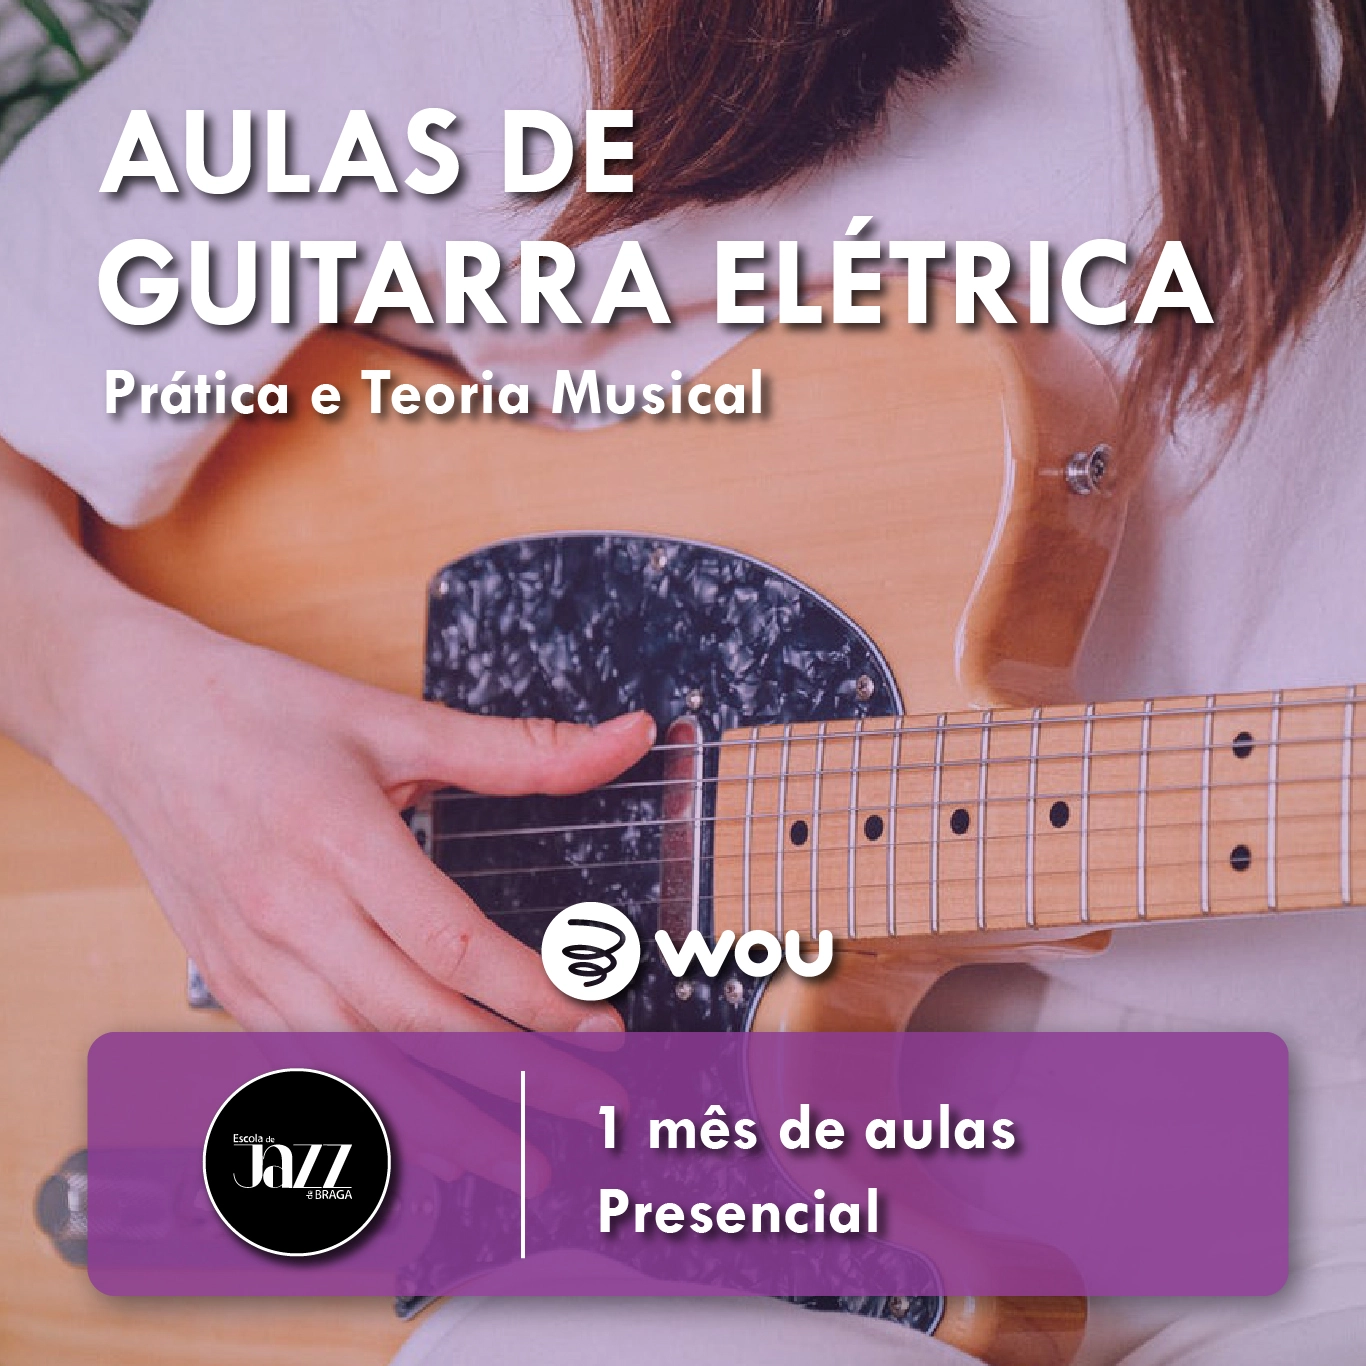 Electric Guitar Classes in Braga